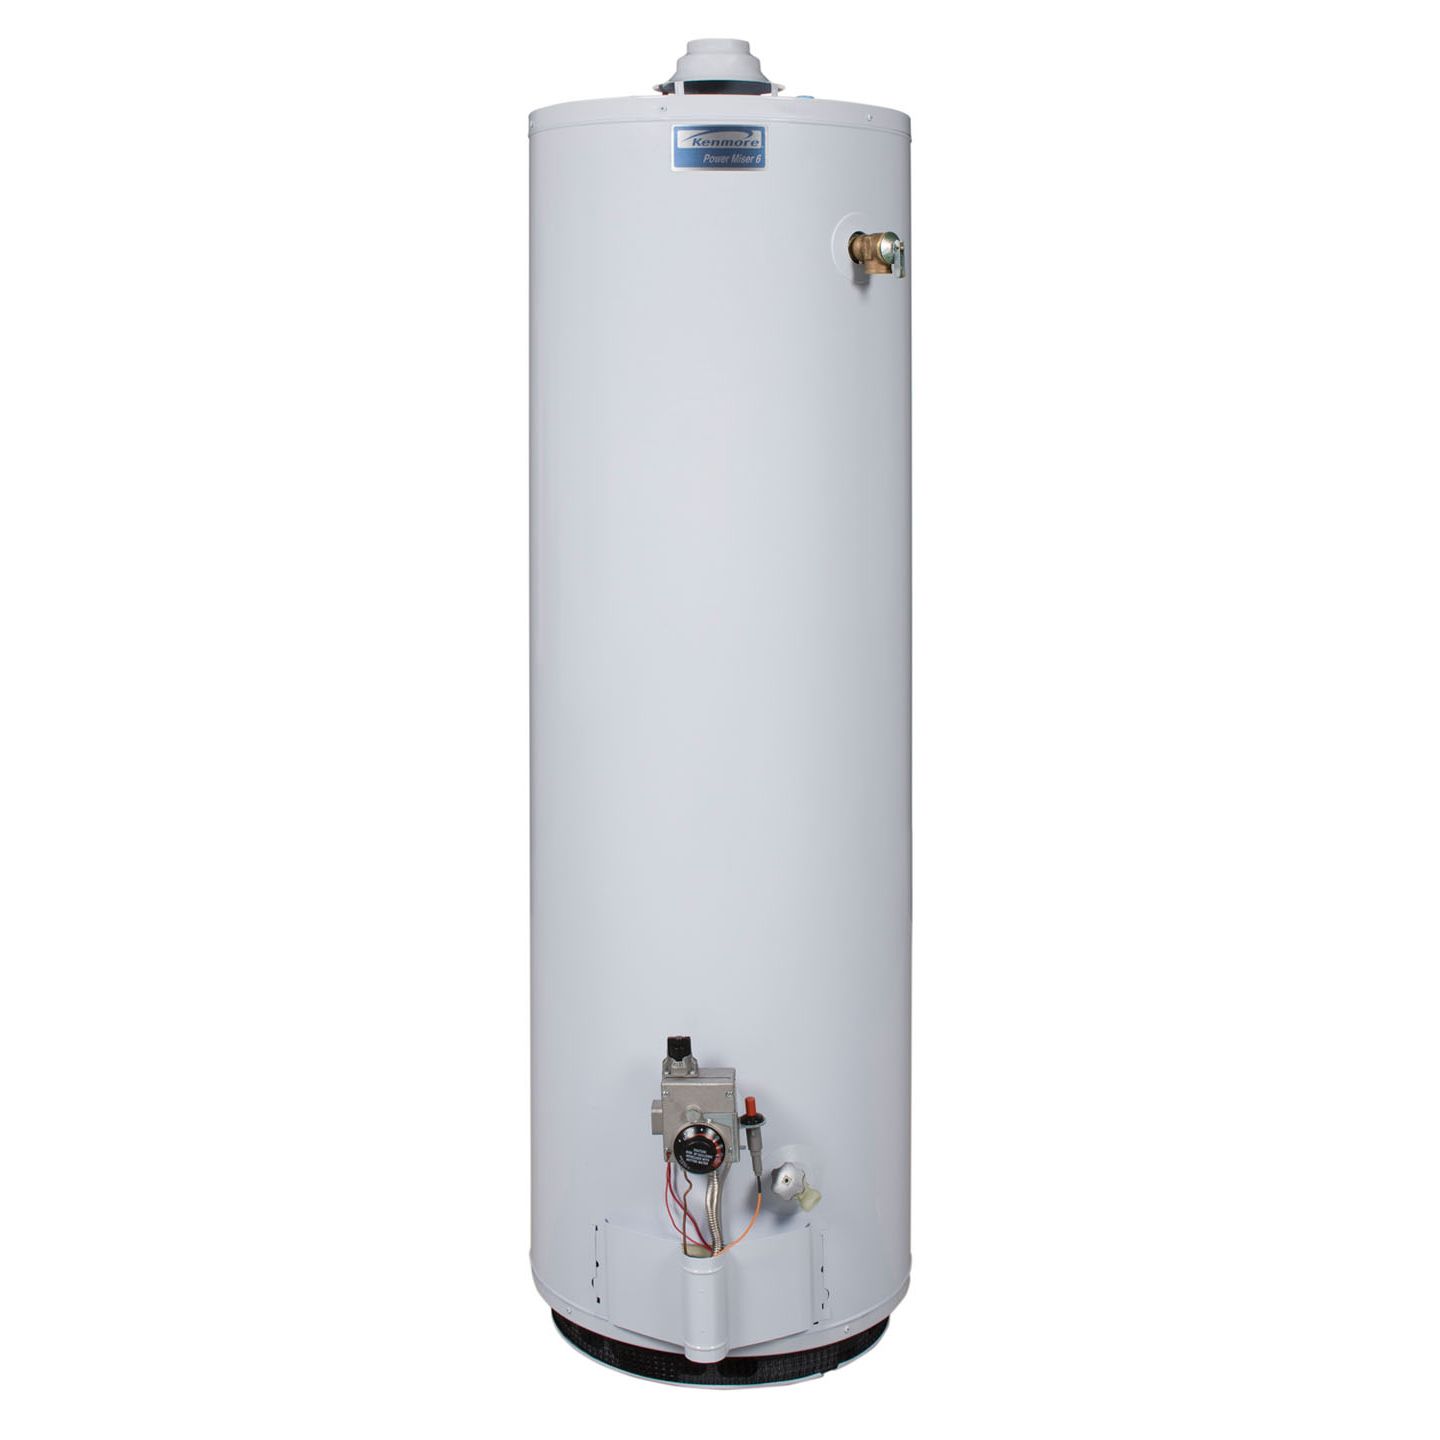 Kenmore Natural gas water heater 40 gal. 33643 - Sears